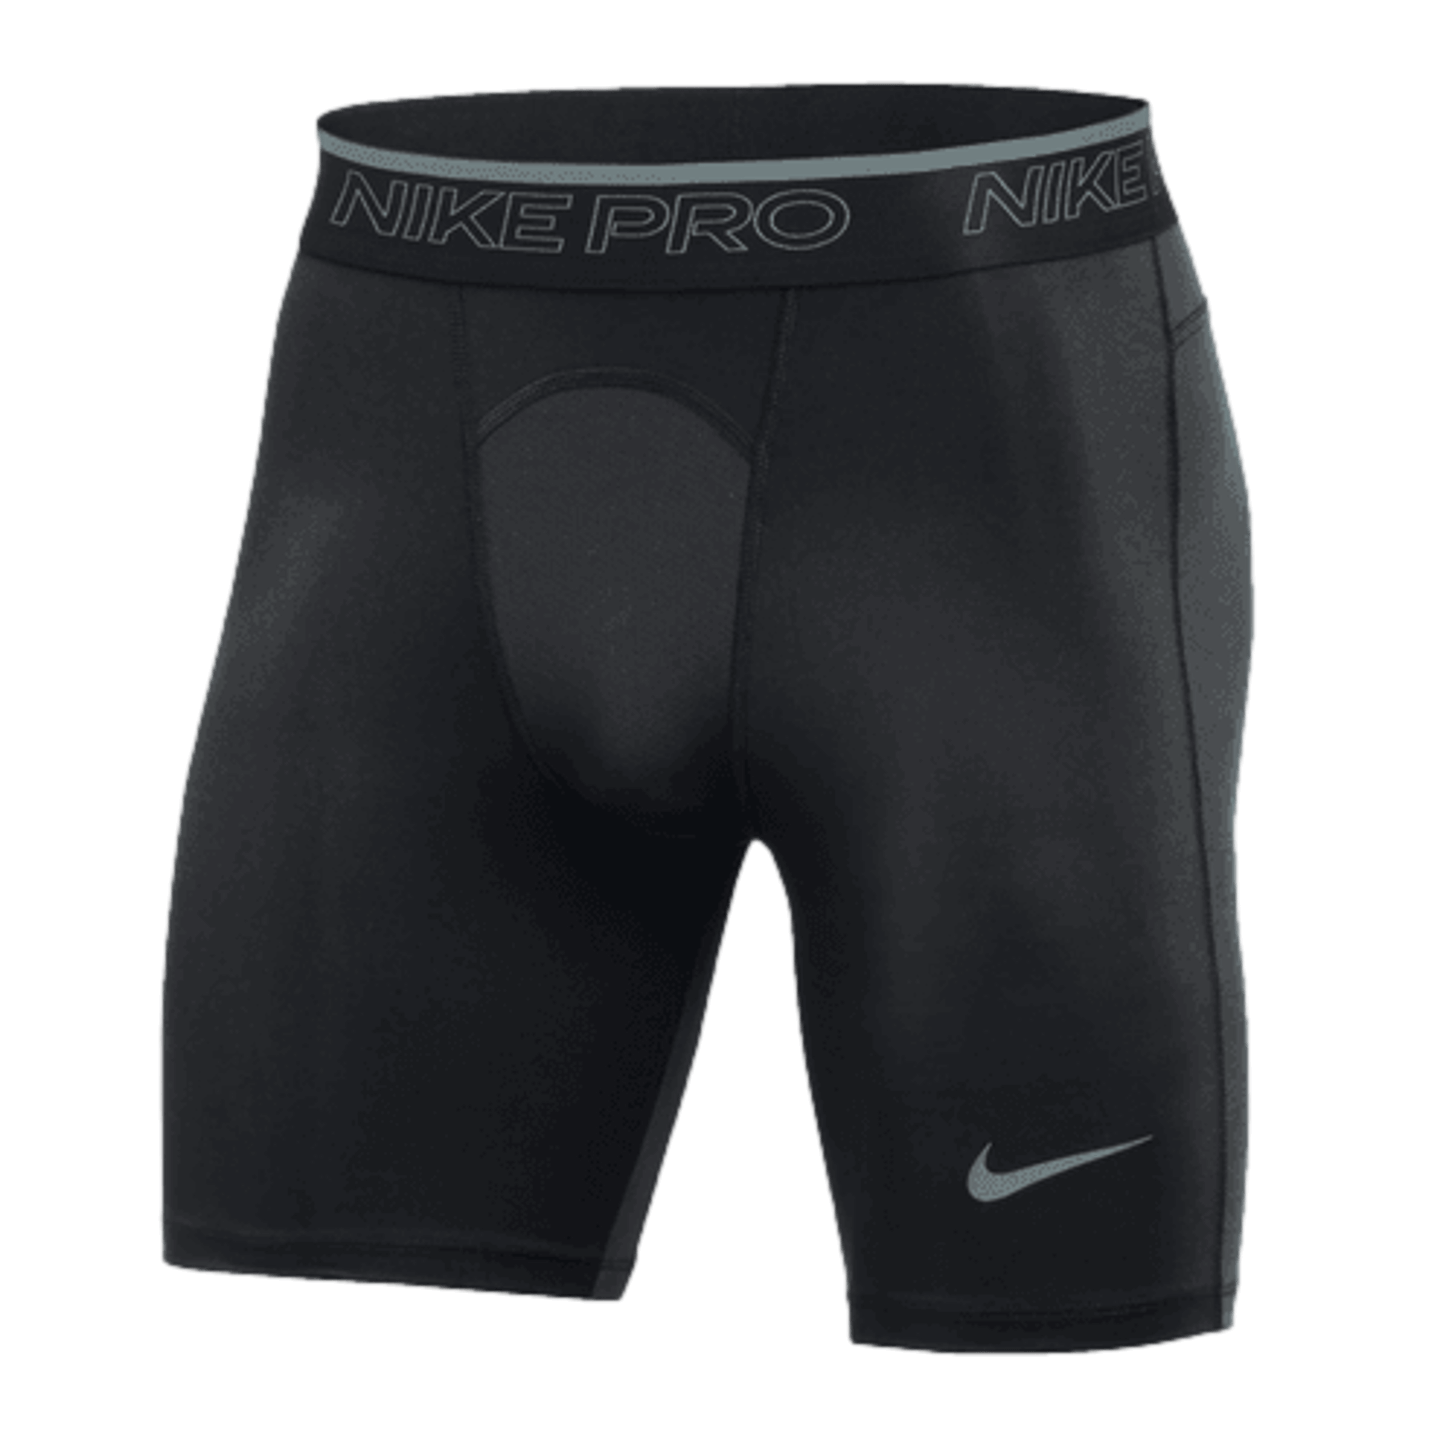 Nike Pro Bike Shorts